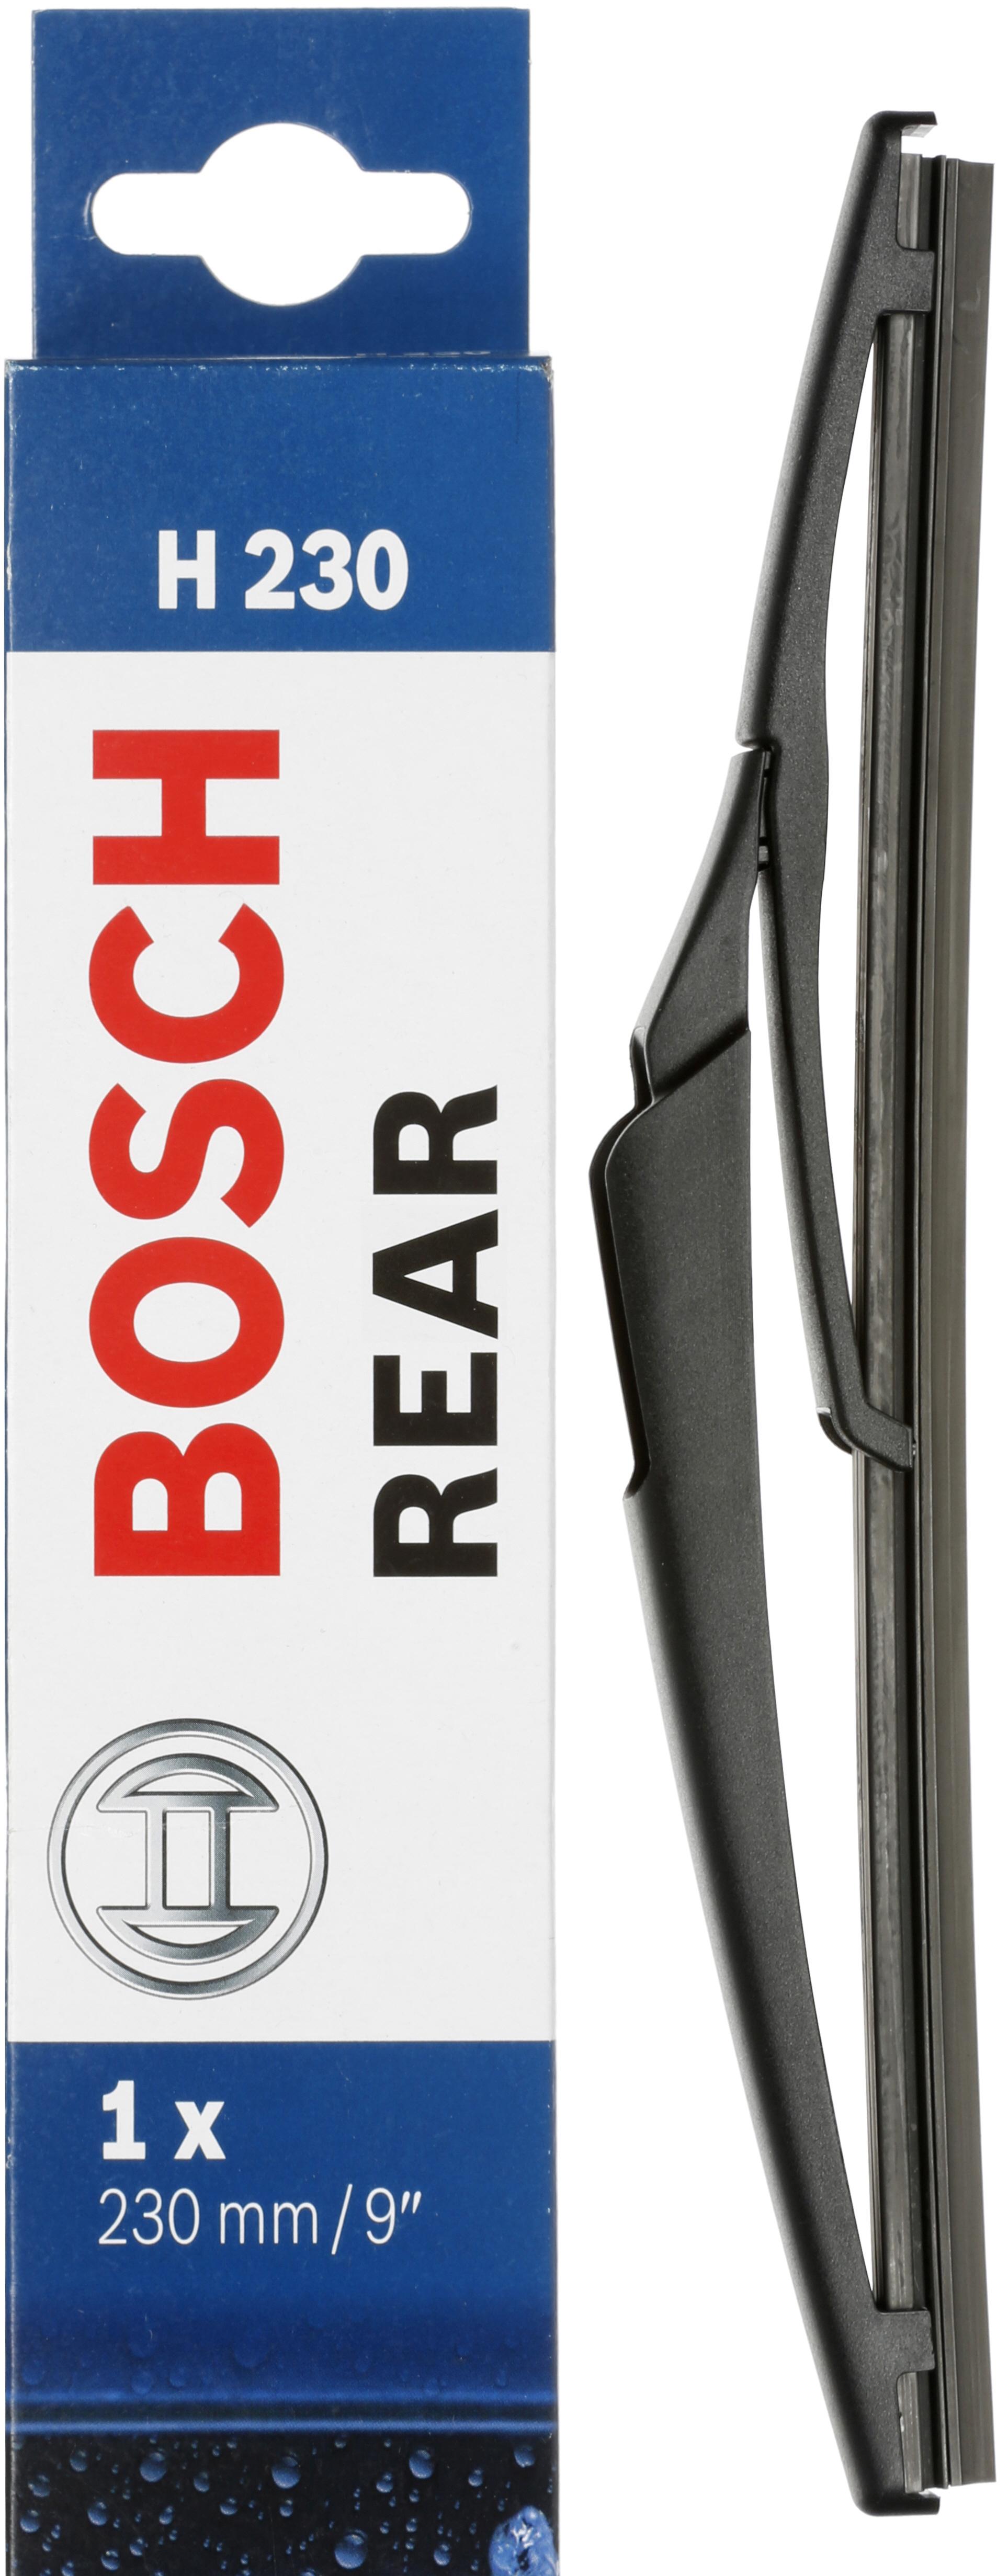 Bosch H230 Wiper Blade - Single